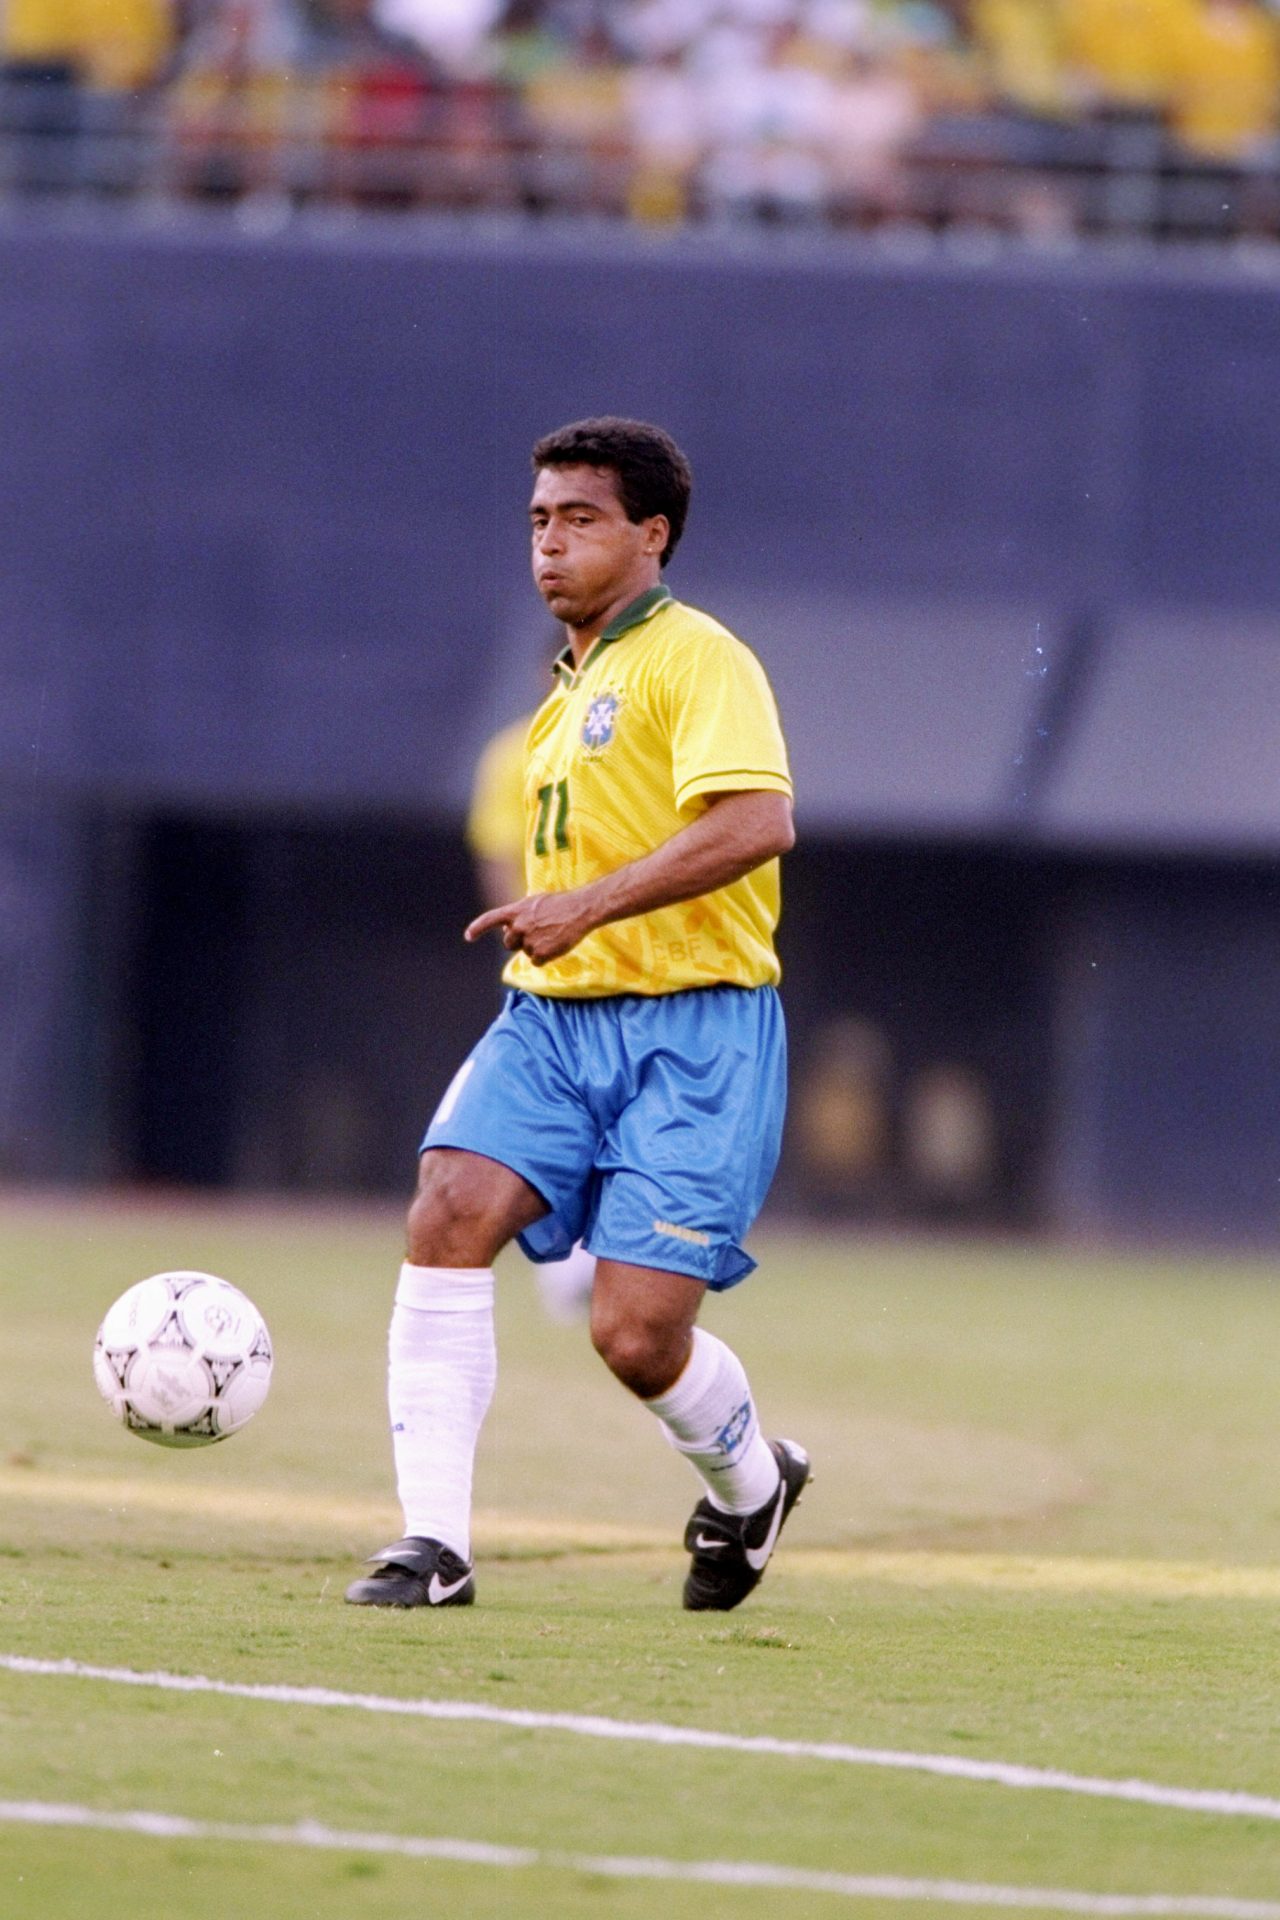 1989 Copa América hero